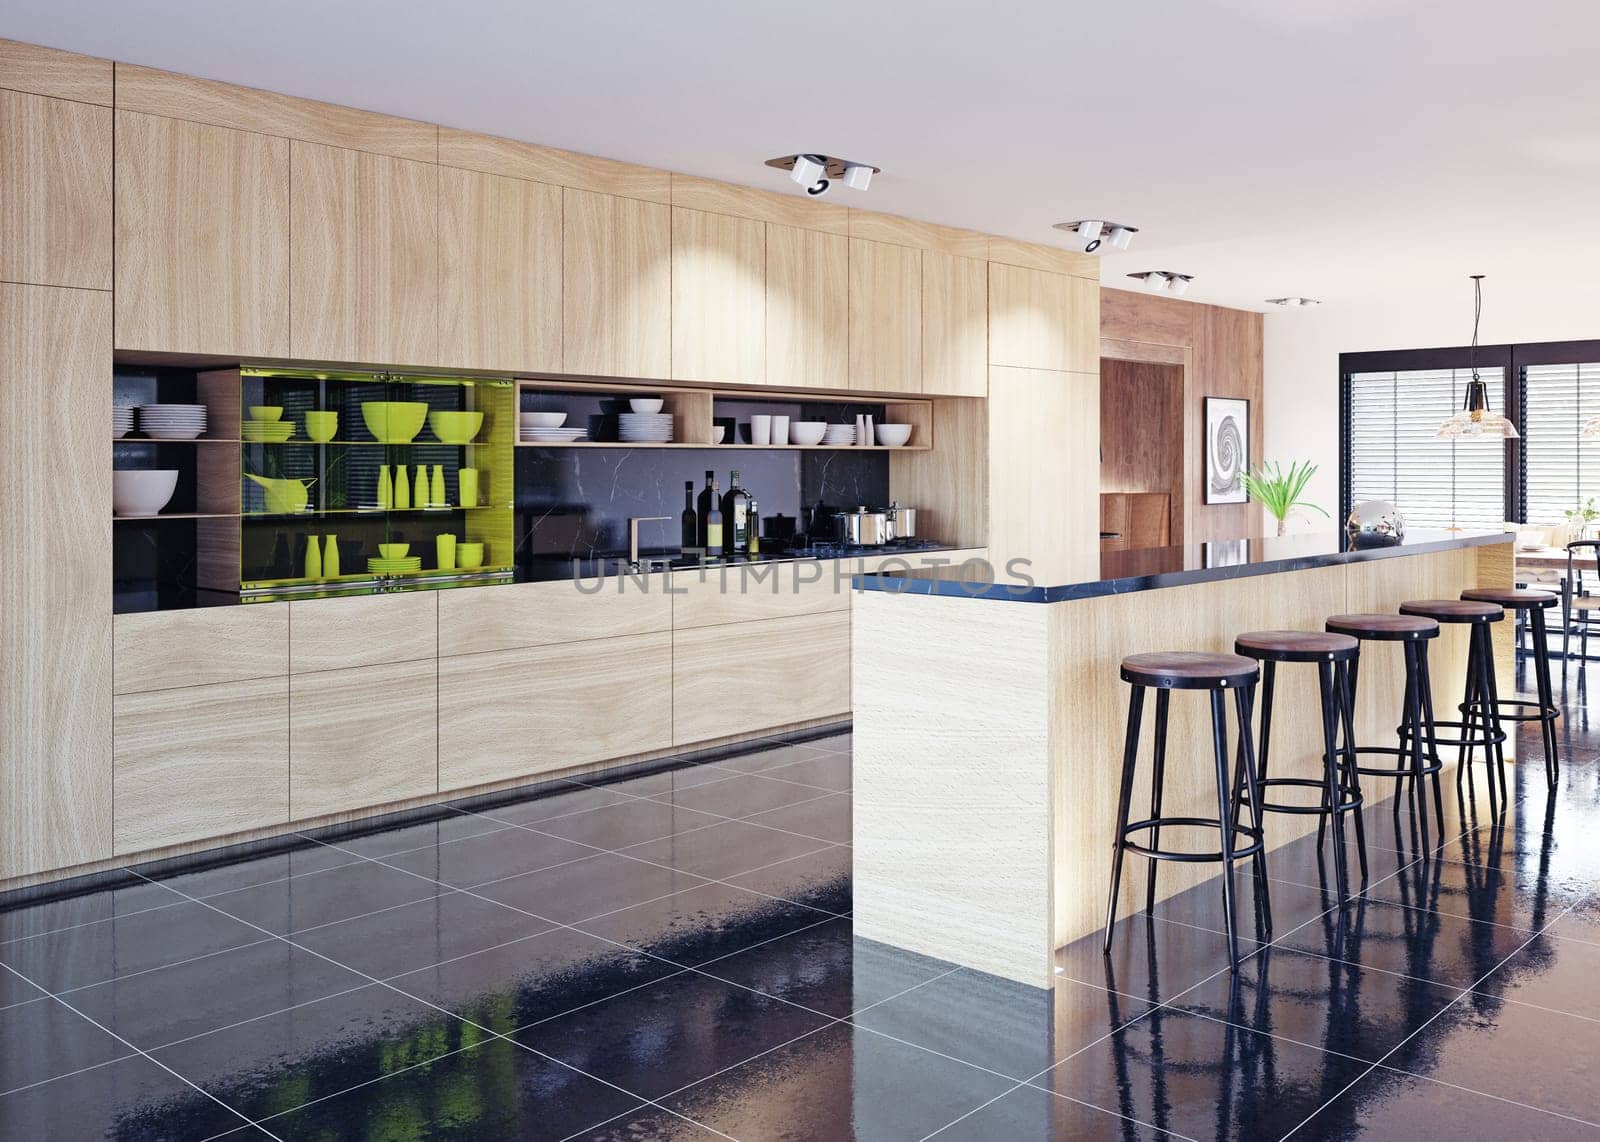 modern domestic kitchen interior. 3d rendering design concept